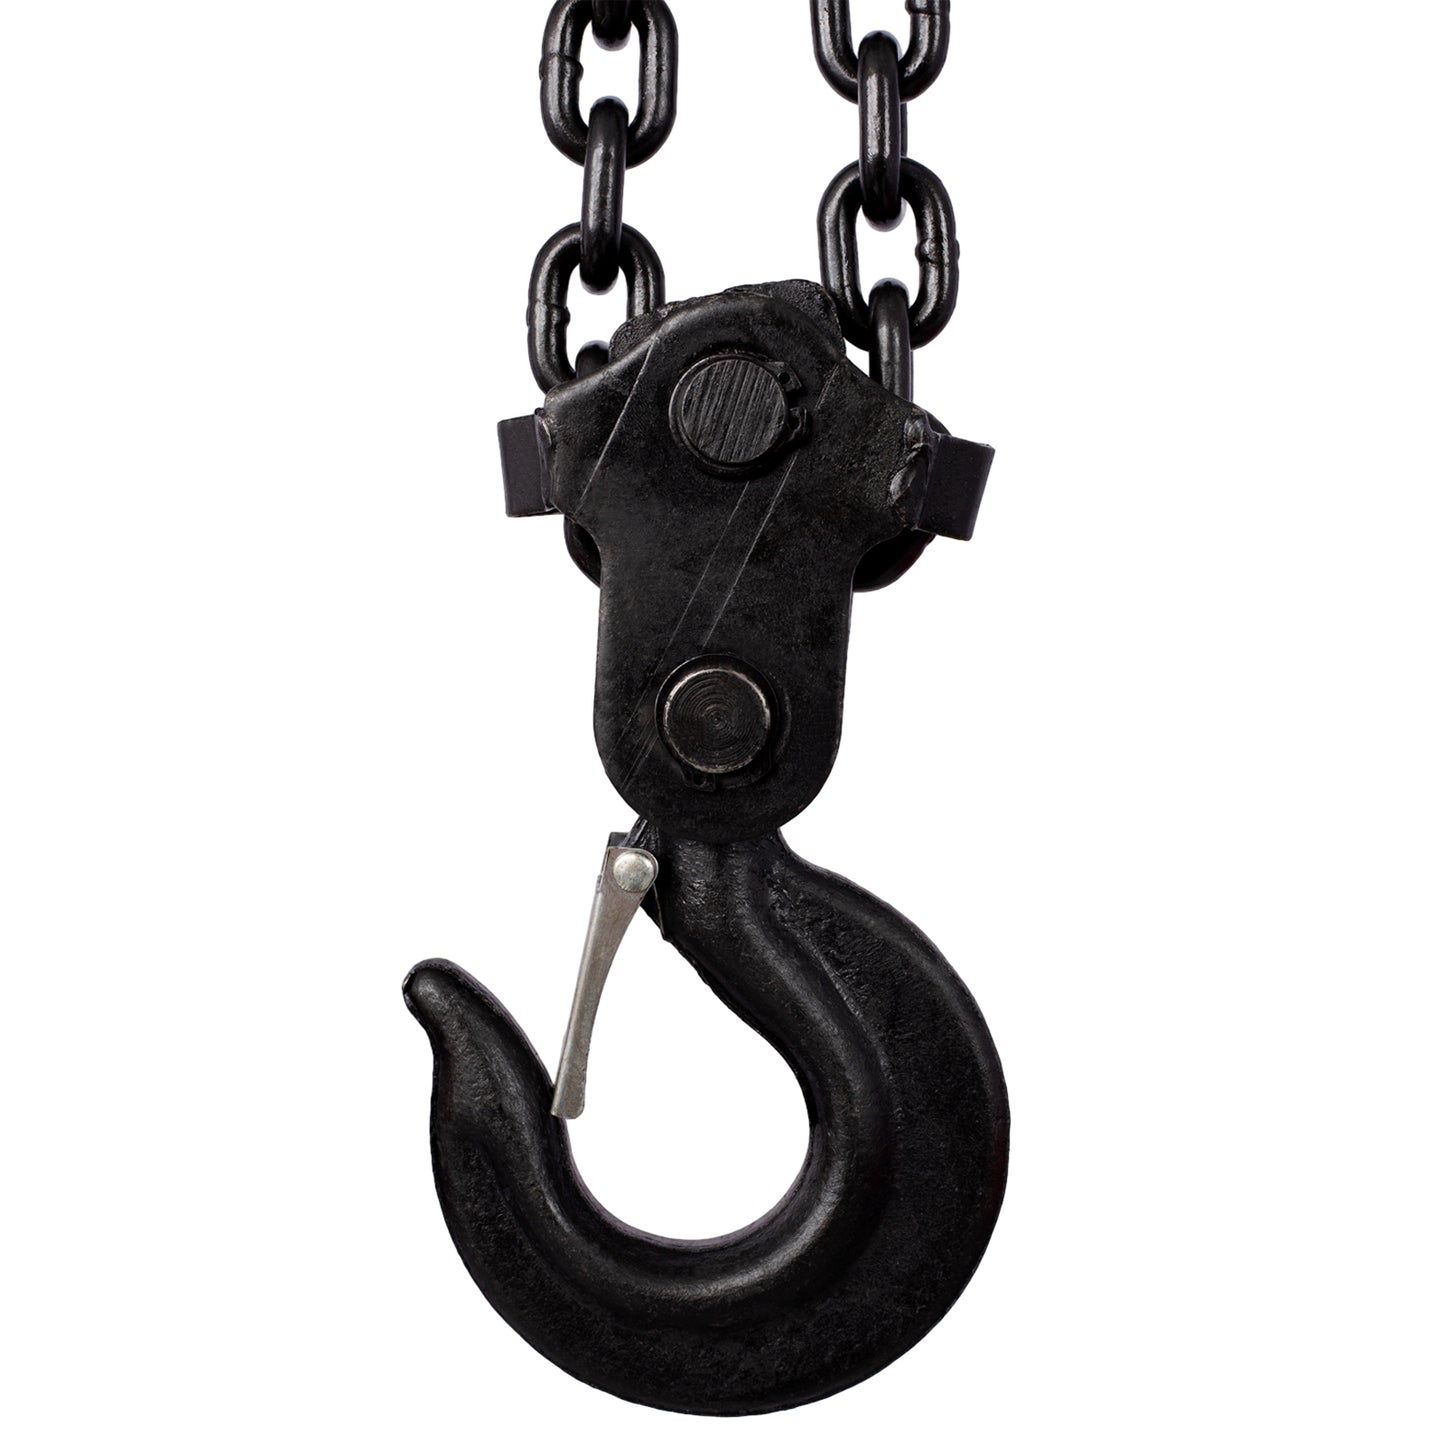 Chain hoist 6600lbs 3T capacity 10ft wIth 2 heavy duty hooks,Manual chain hoist steel construction,Black